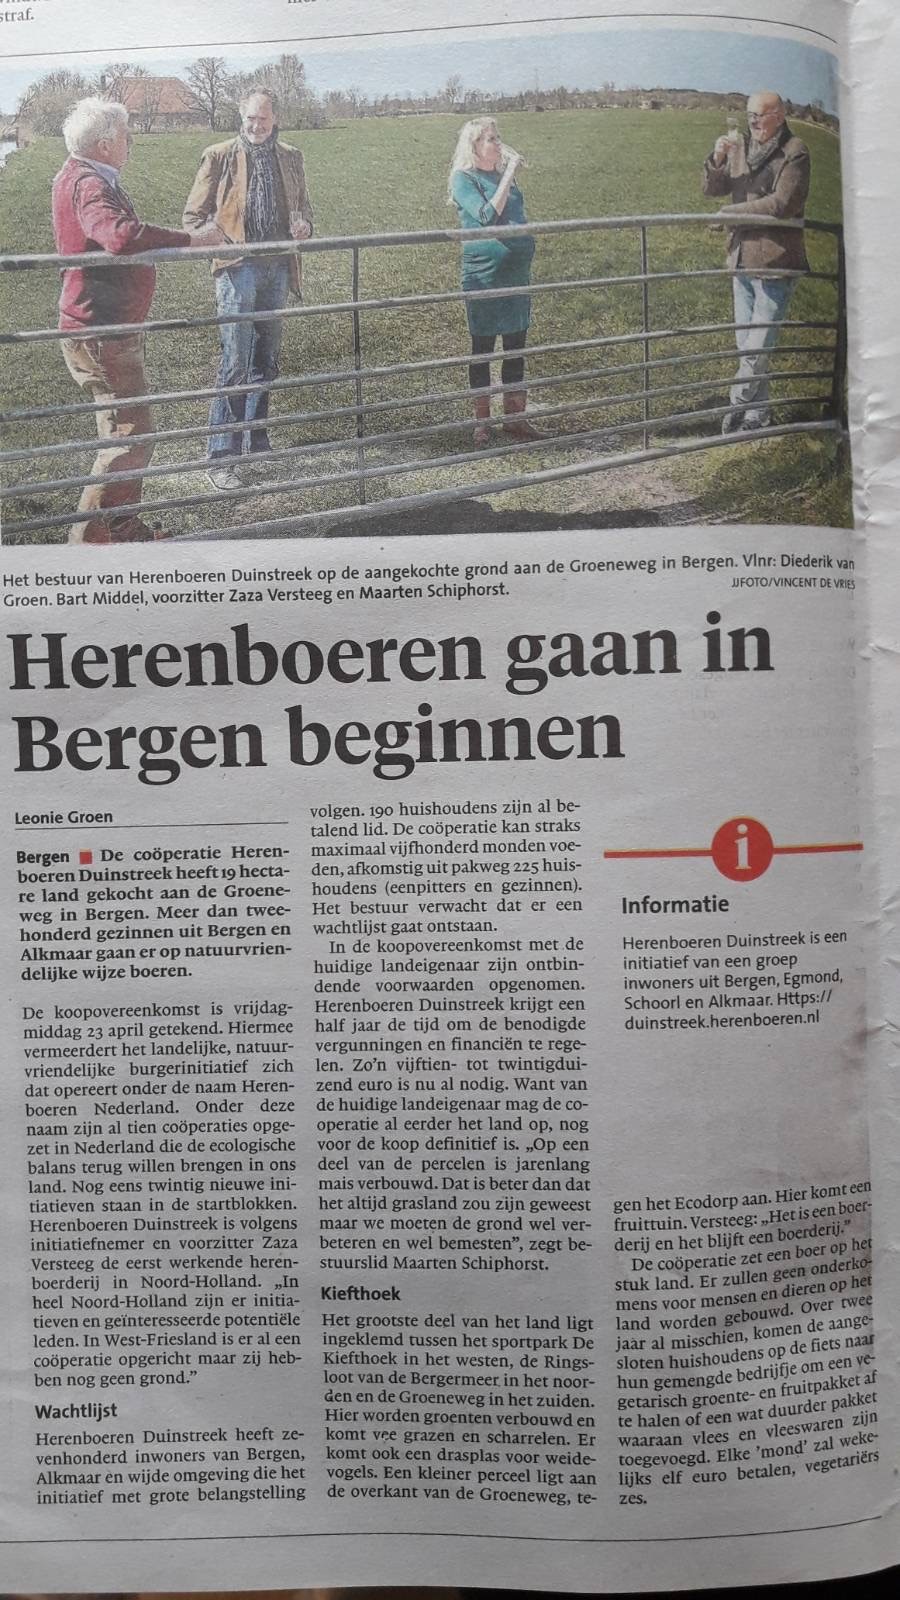 Noord Hollands Dagblad